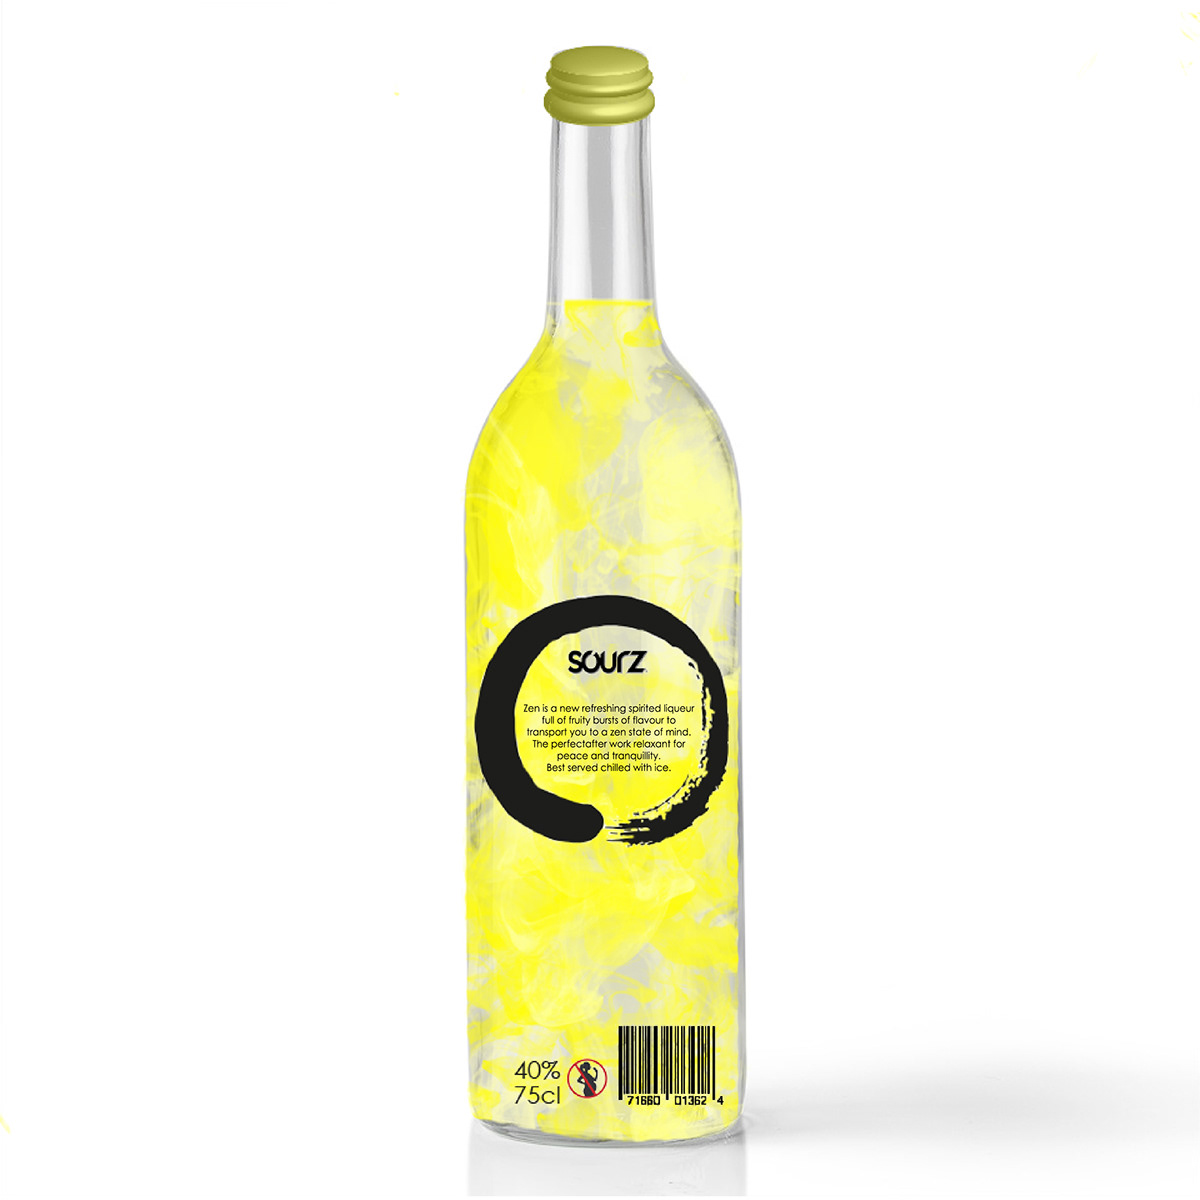 Sourz  jkr product drink range zen relax sub-brand